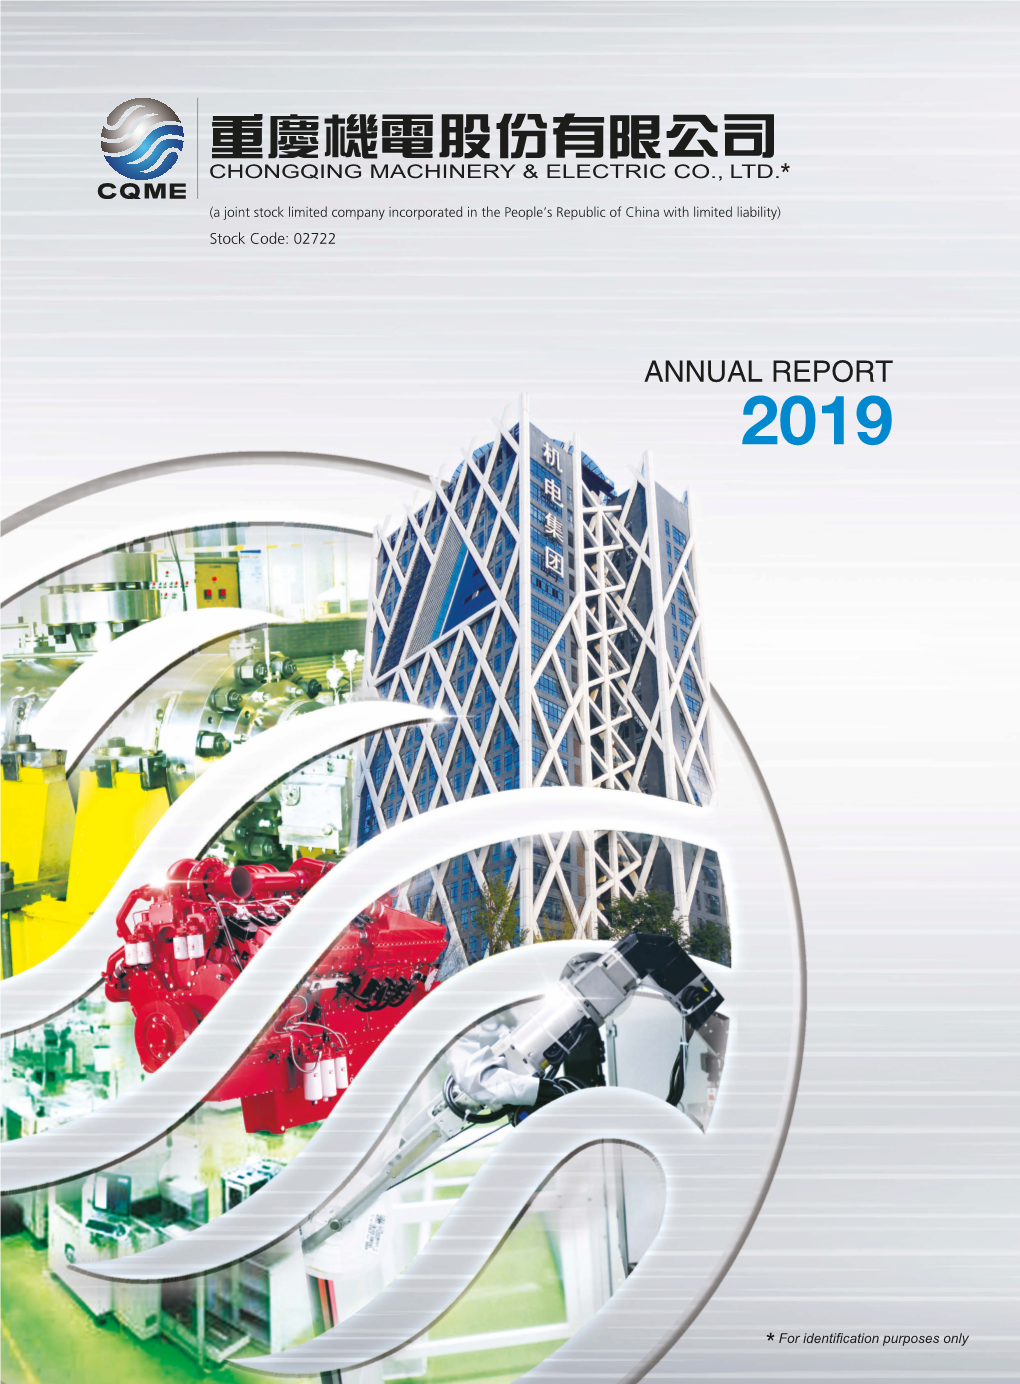 Annual Report 2019 Annual Report 2019 Contents